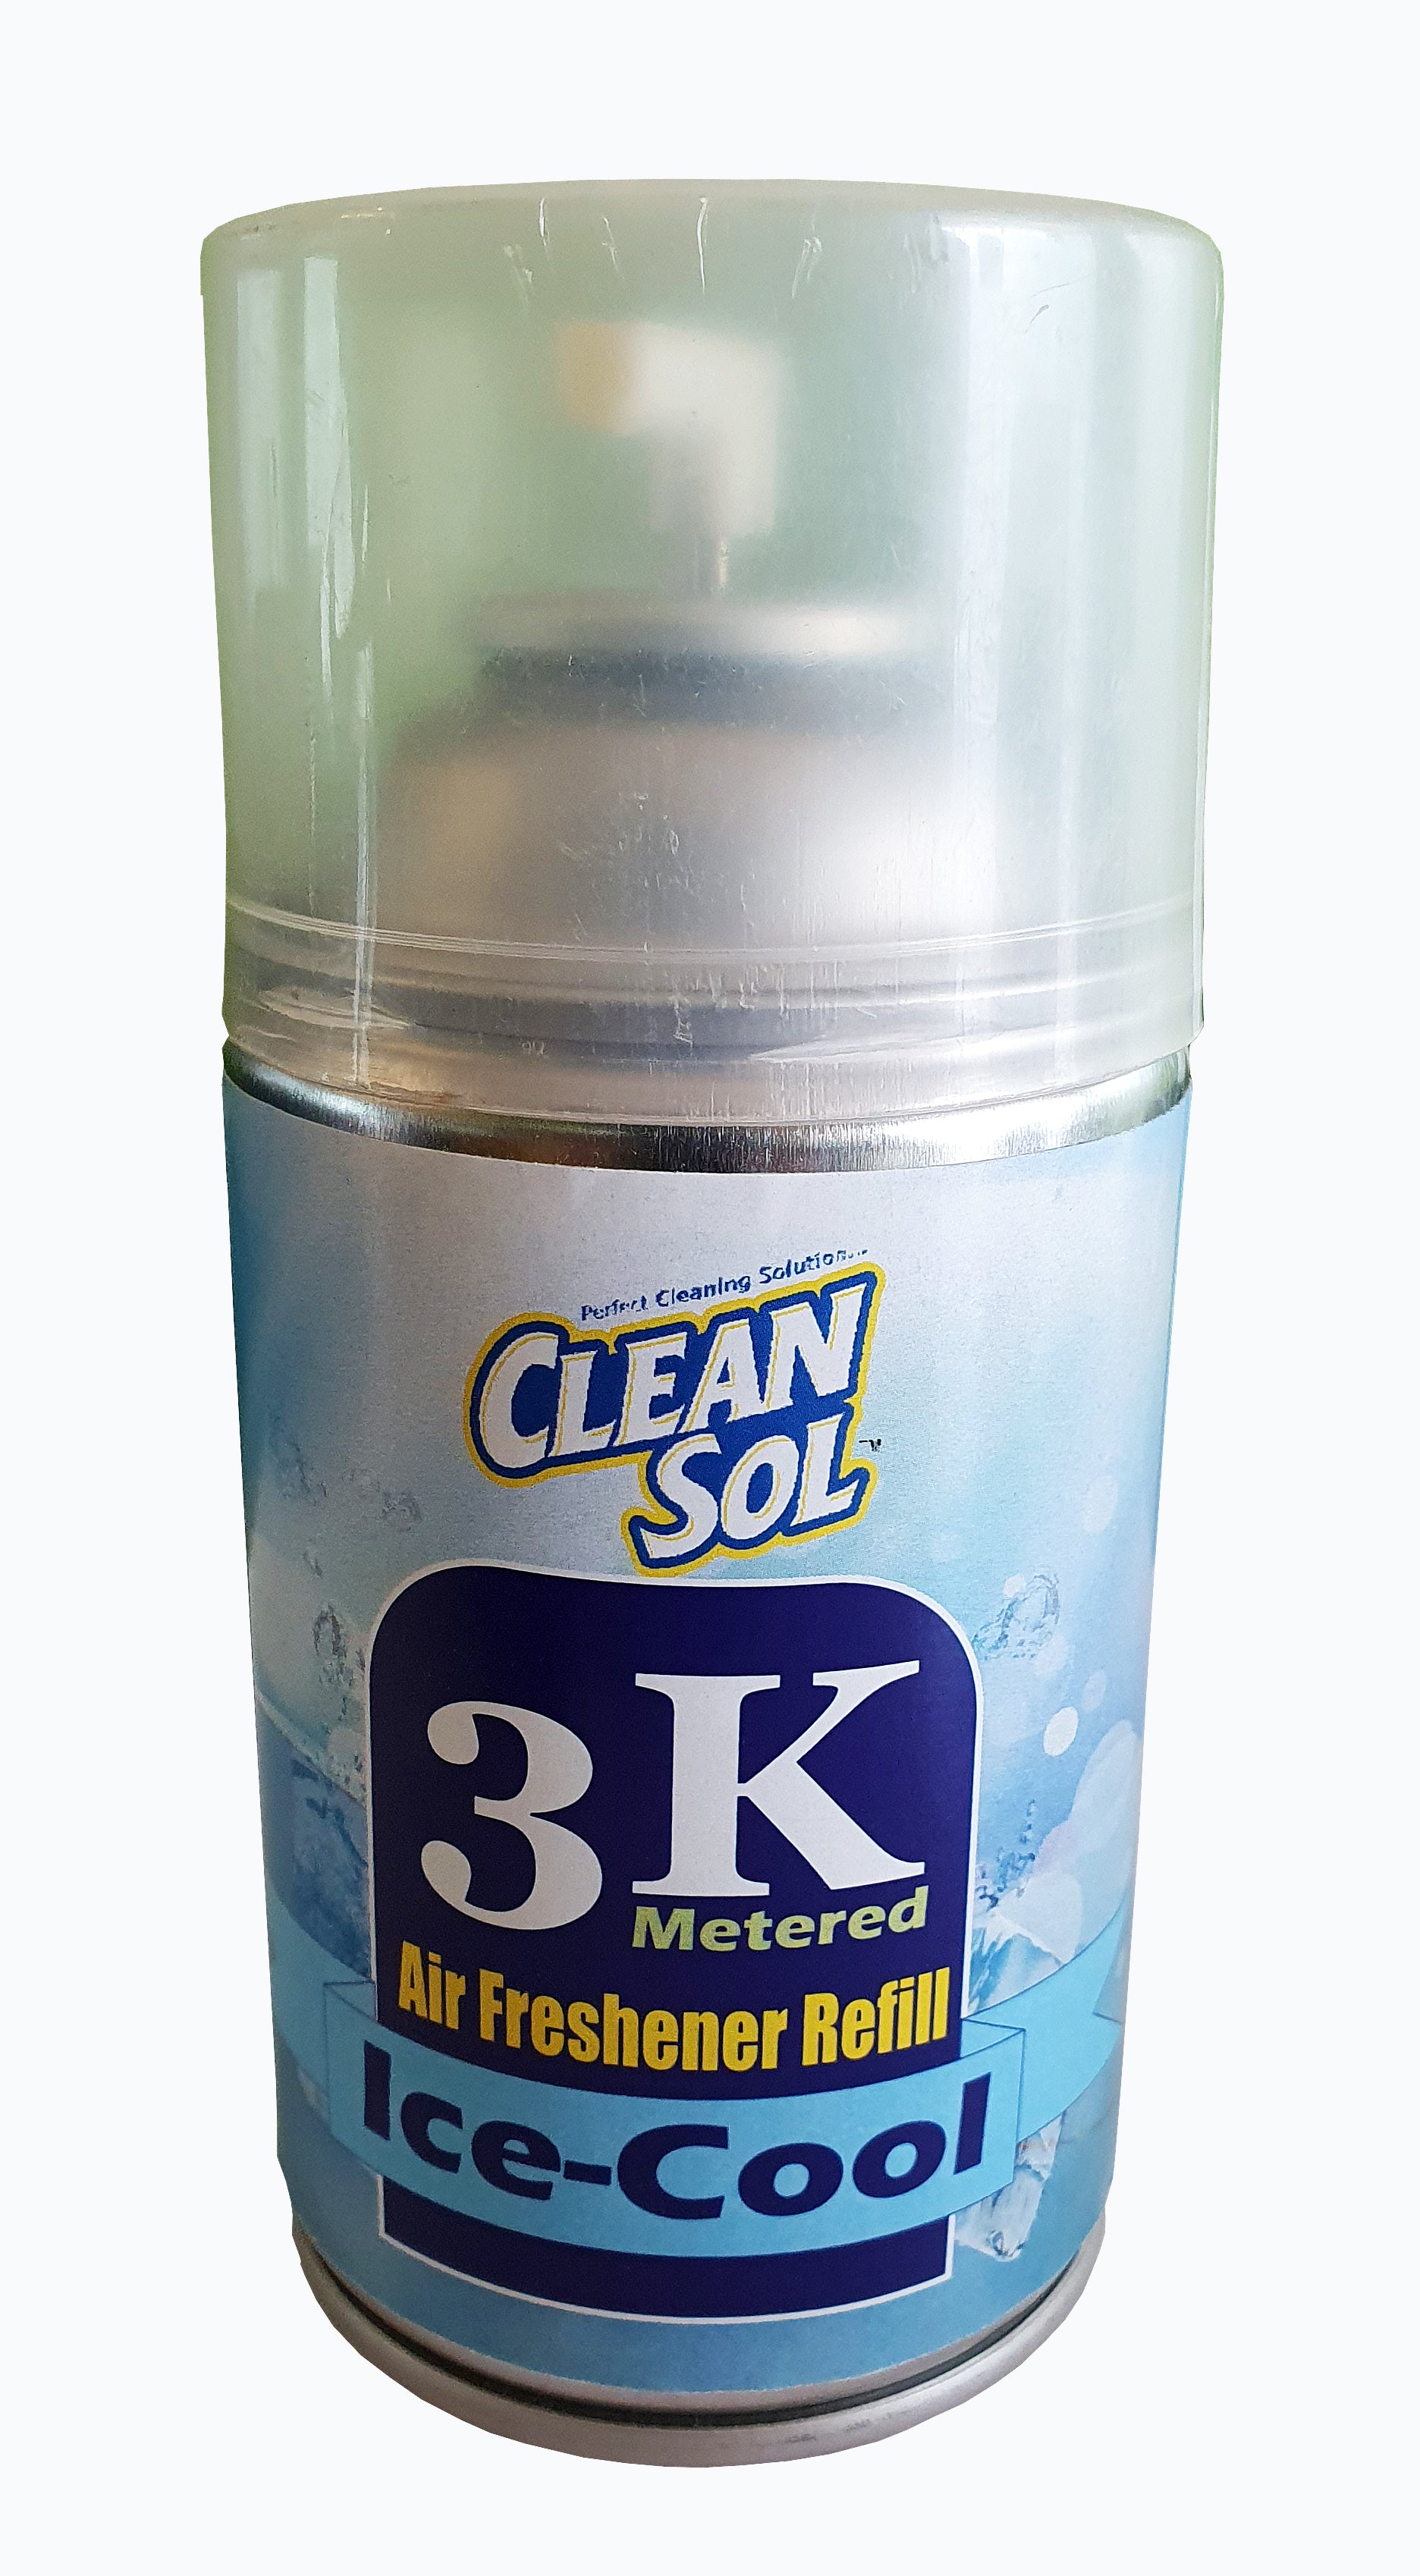 Cleansol 3K metered Shot Air freshener